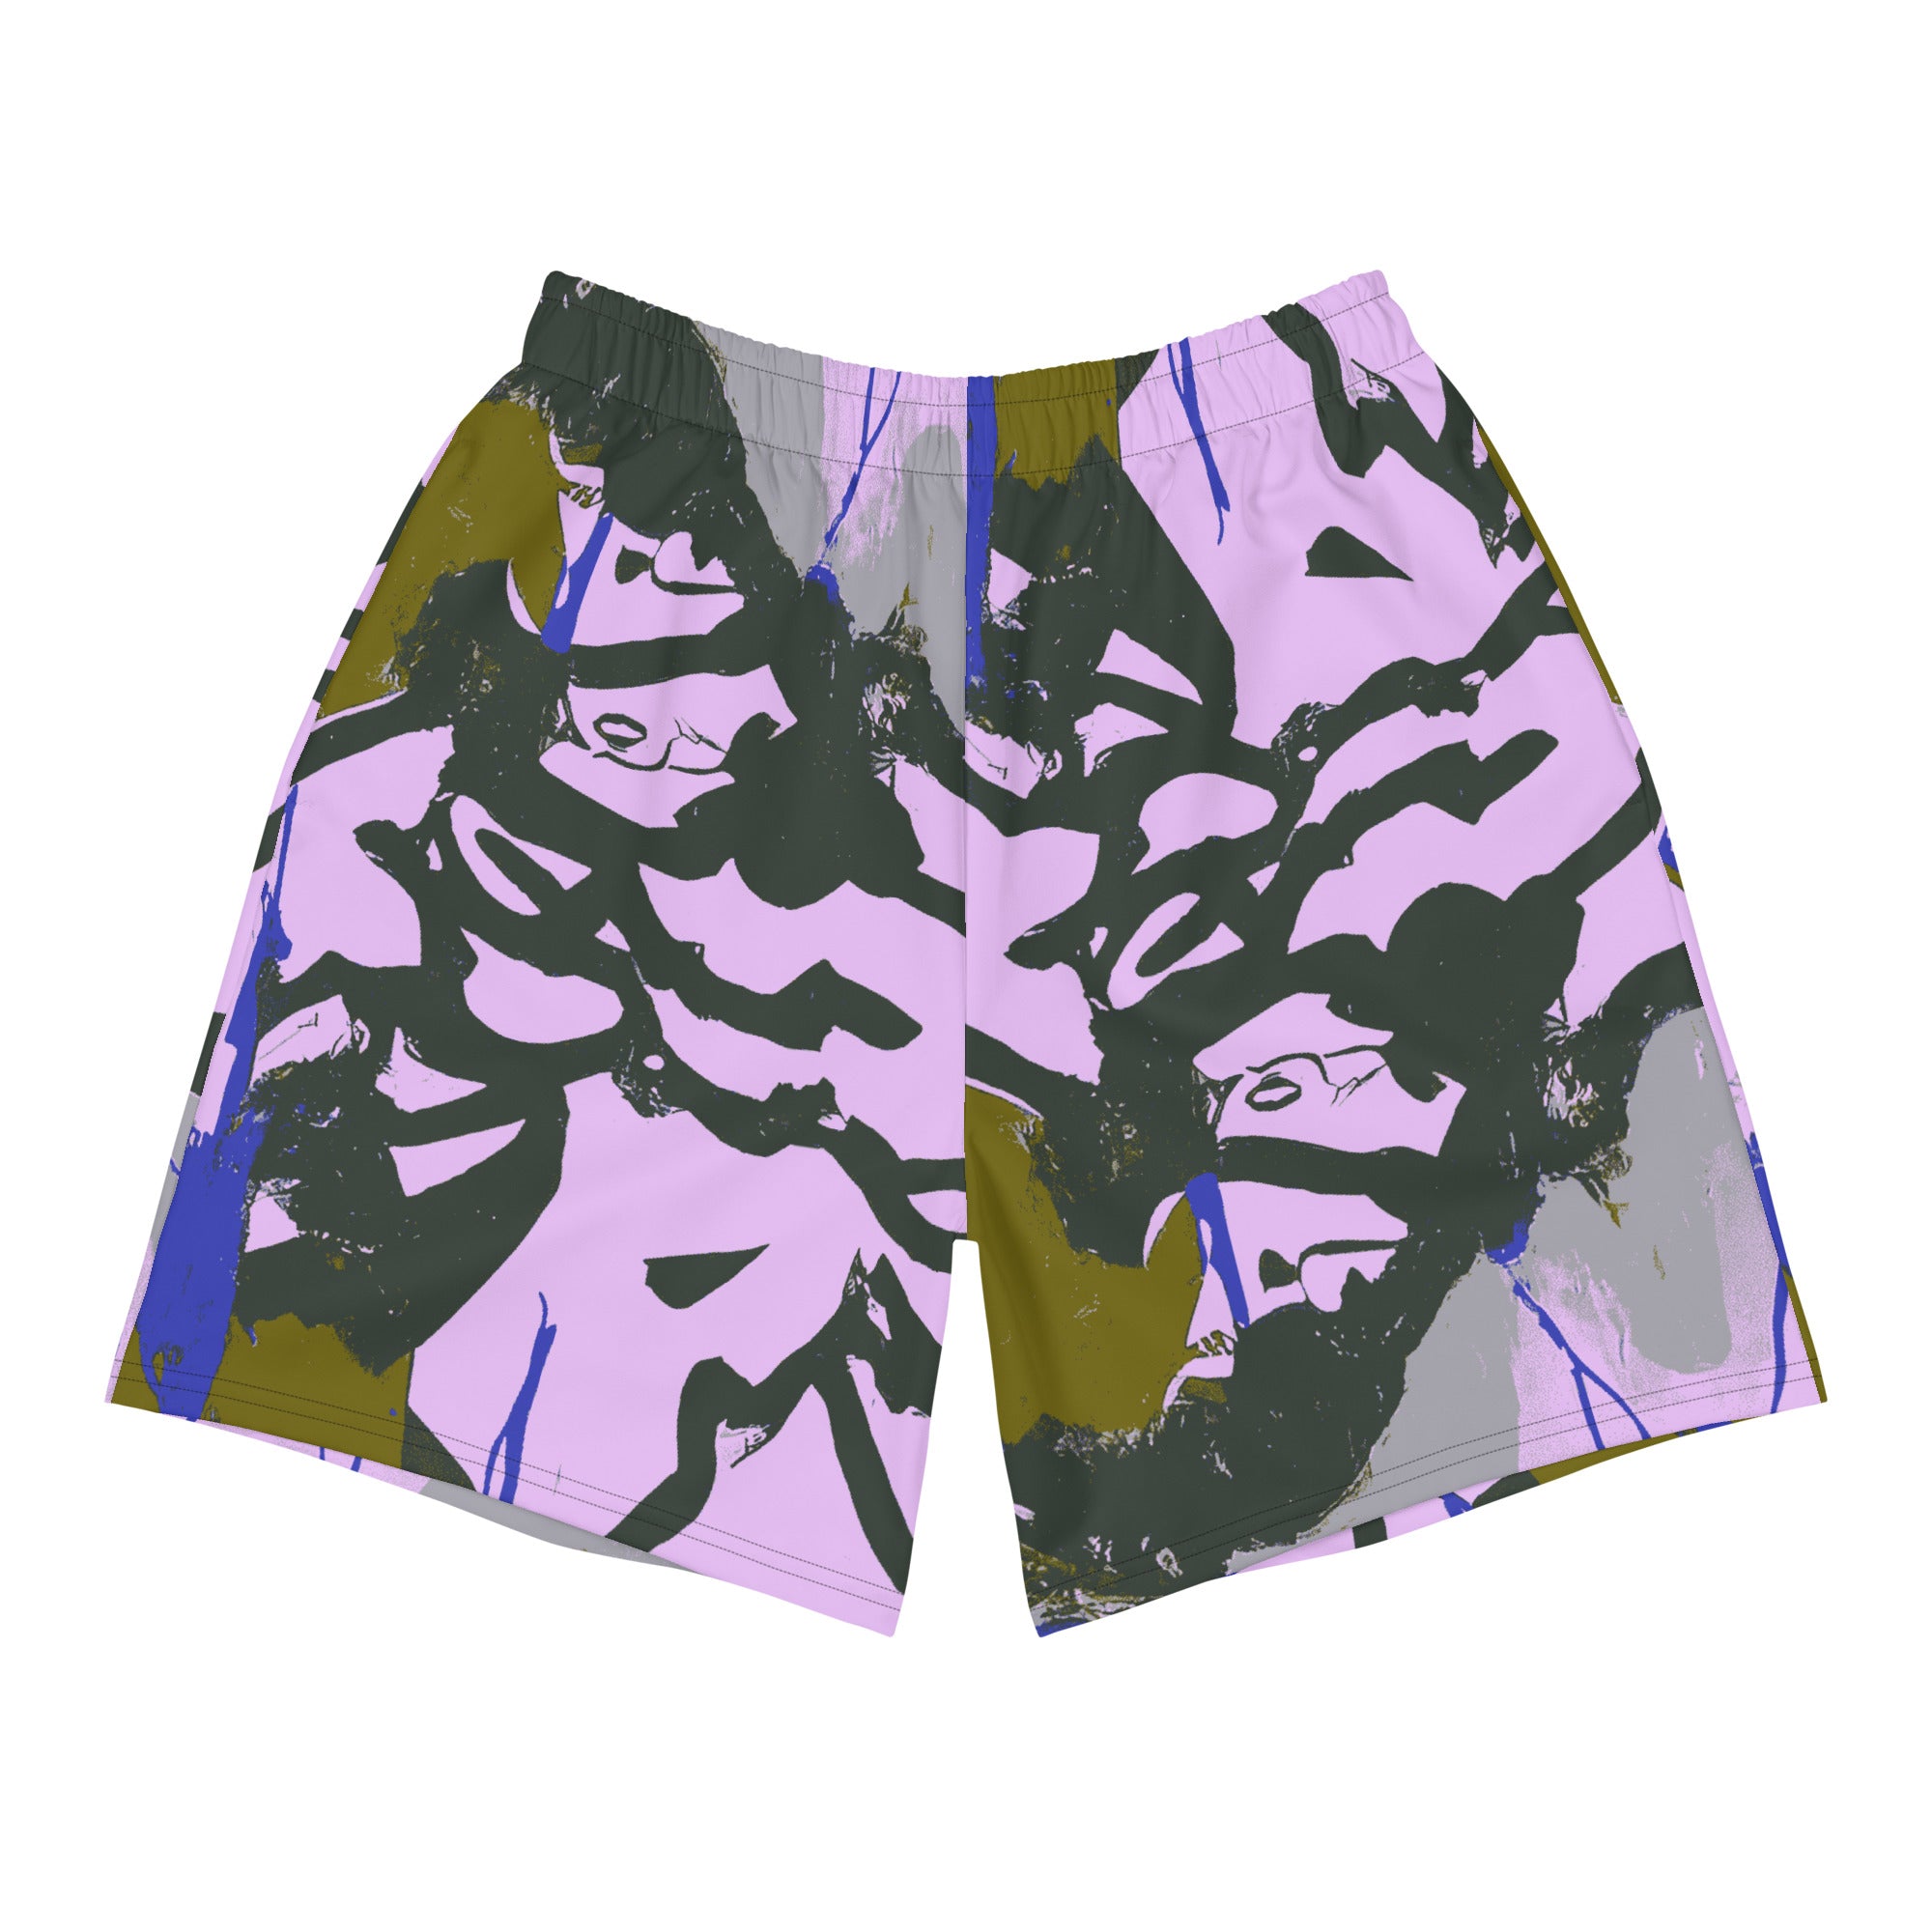 Terra Ferma IV® Unisex Shorts (7/7 pieces for sale)